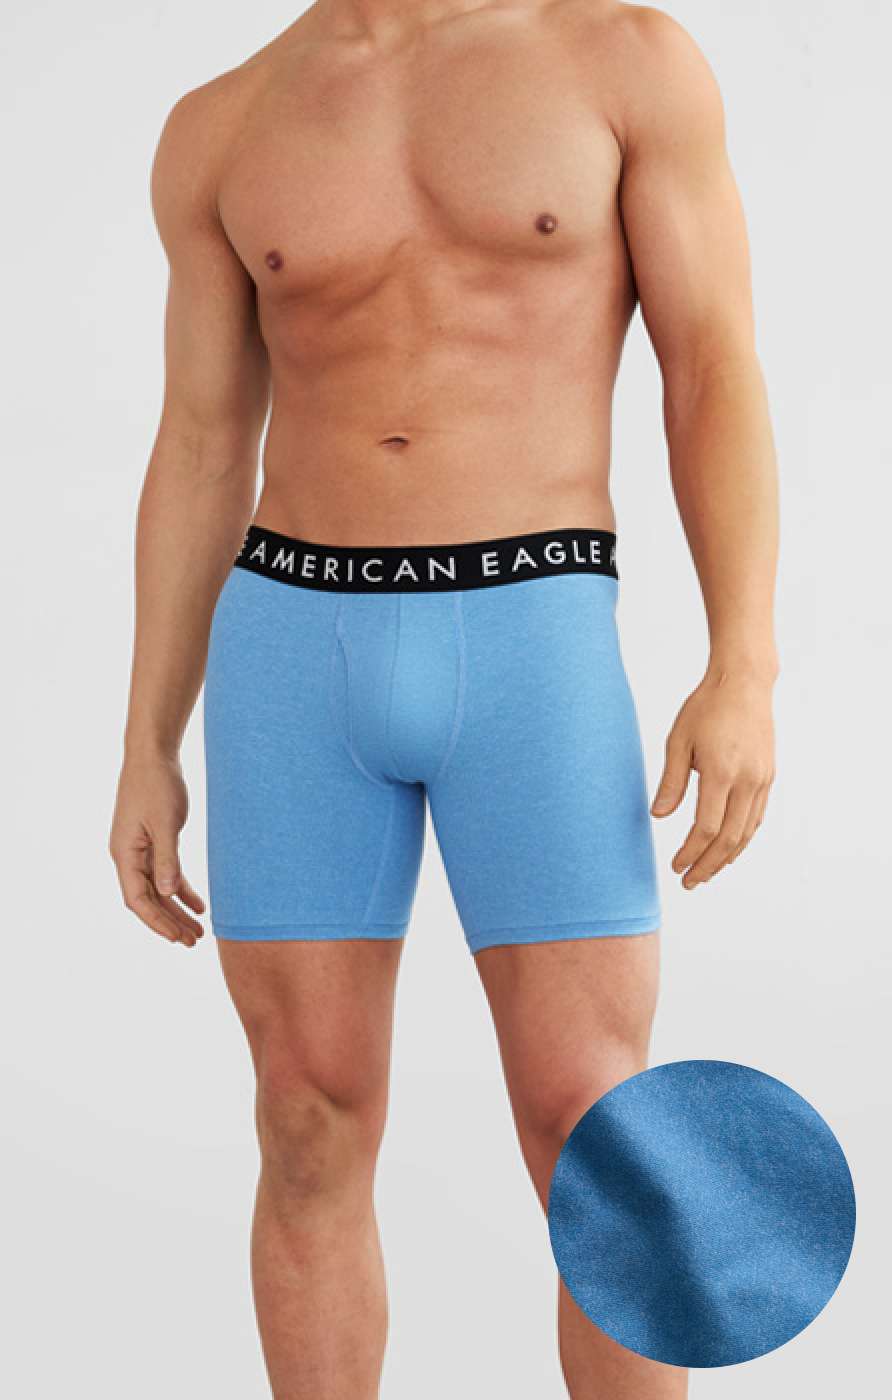 American Eagle Underwear Mens 1 Cotton Stretch Boxer S M L XL XXL XXXL New  